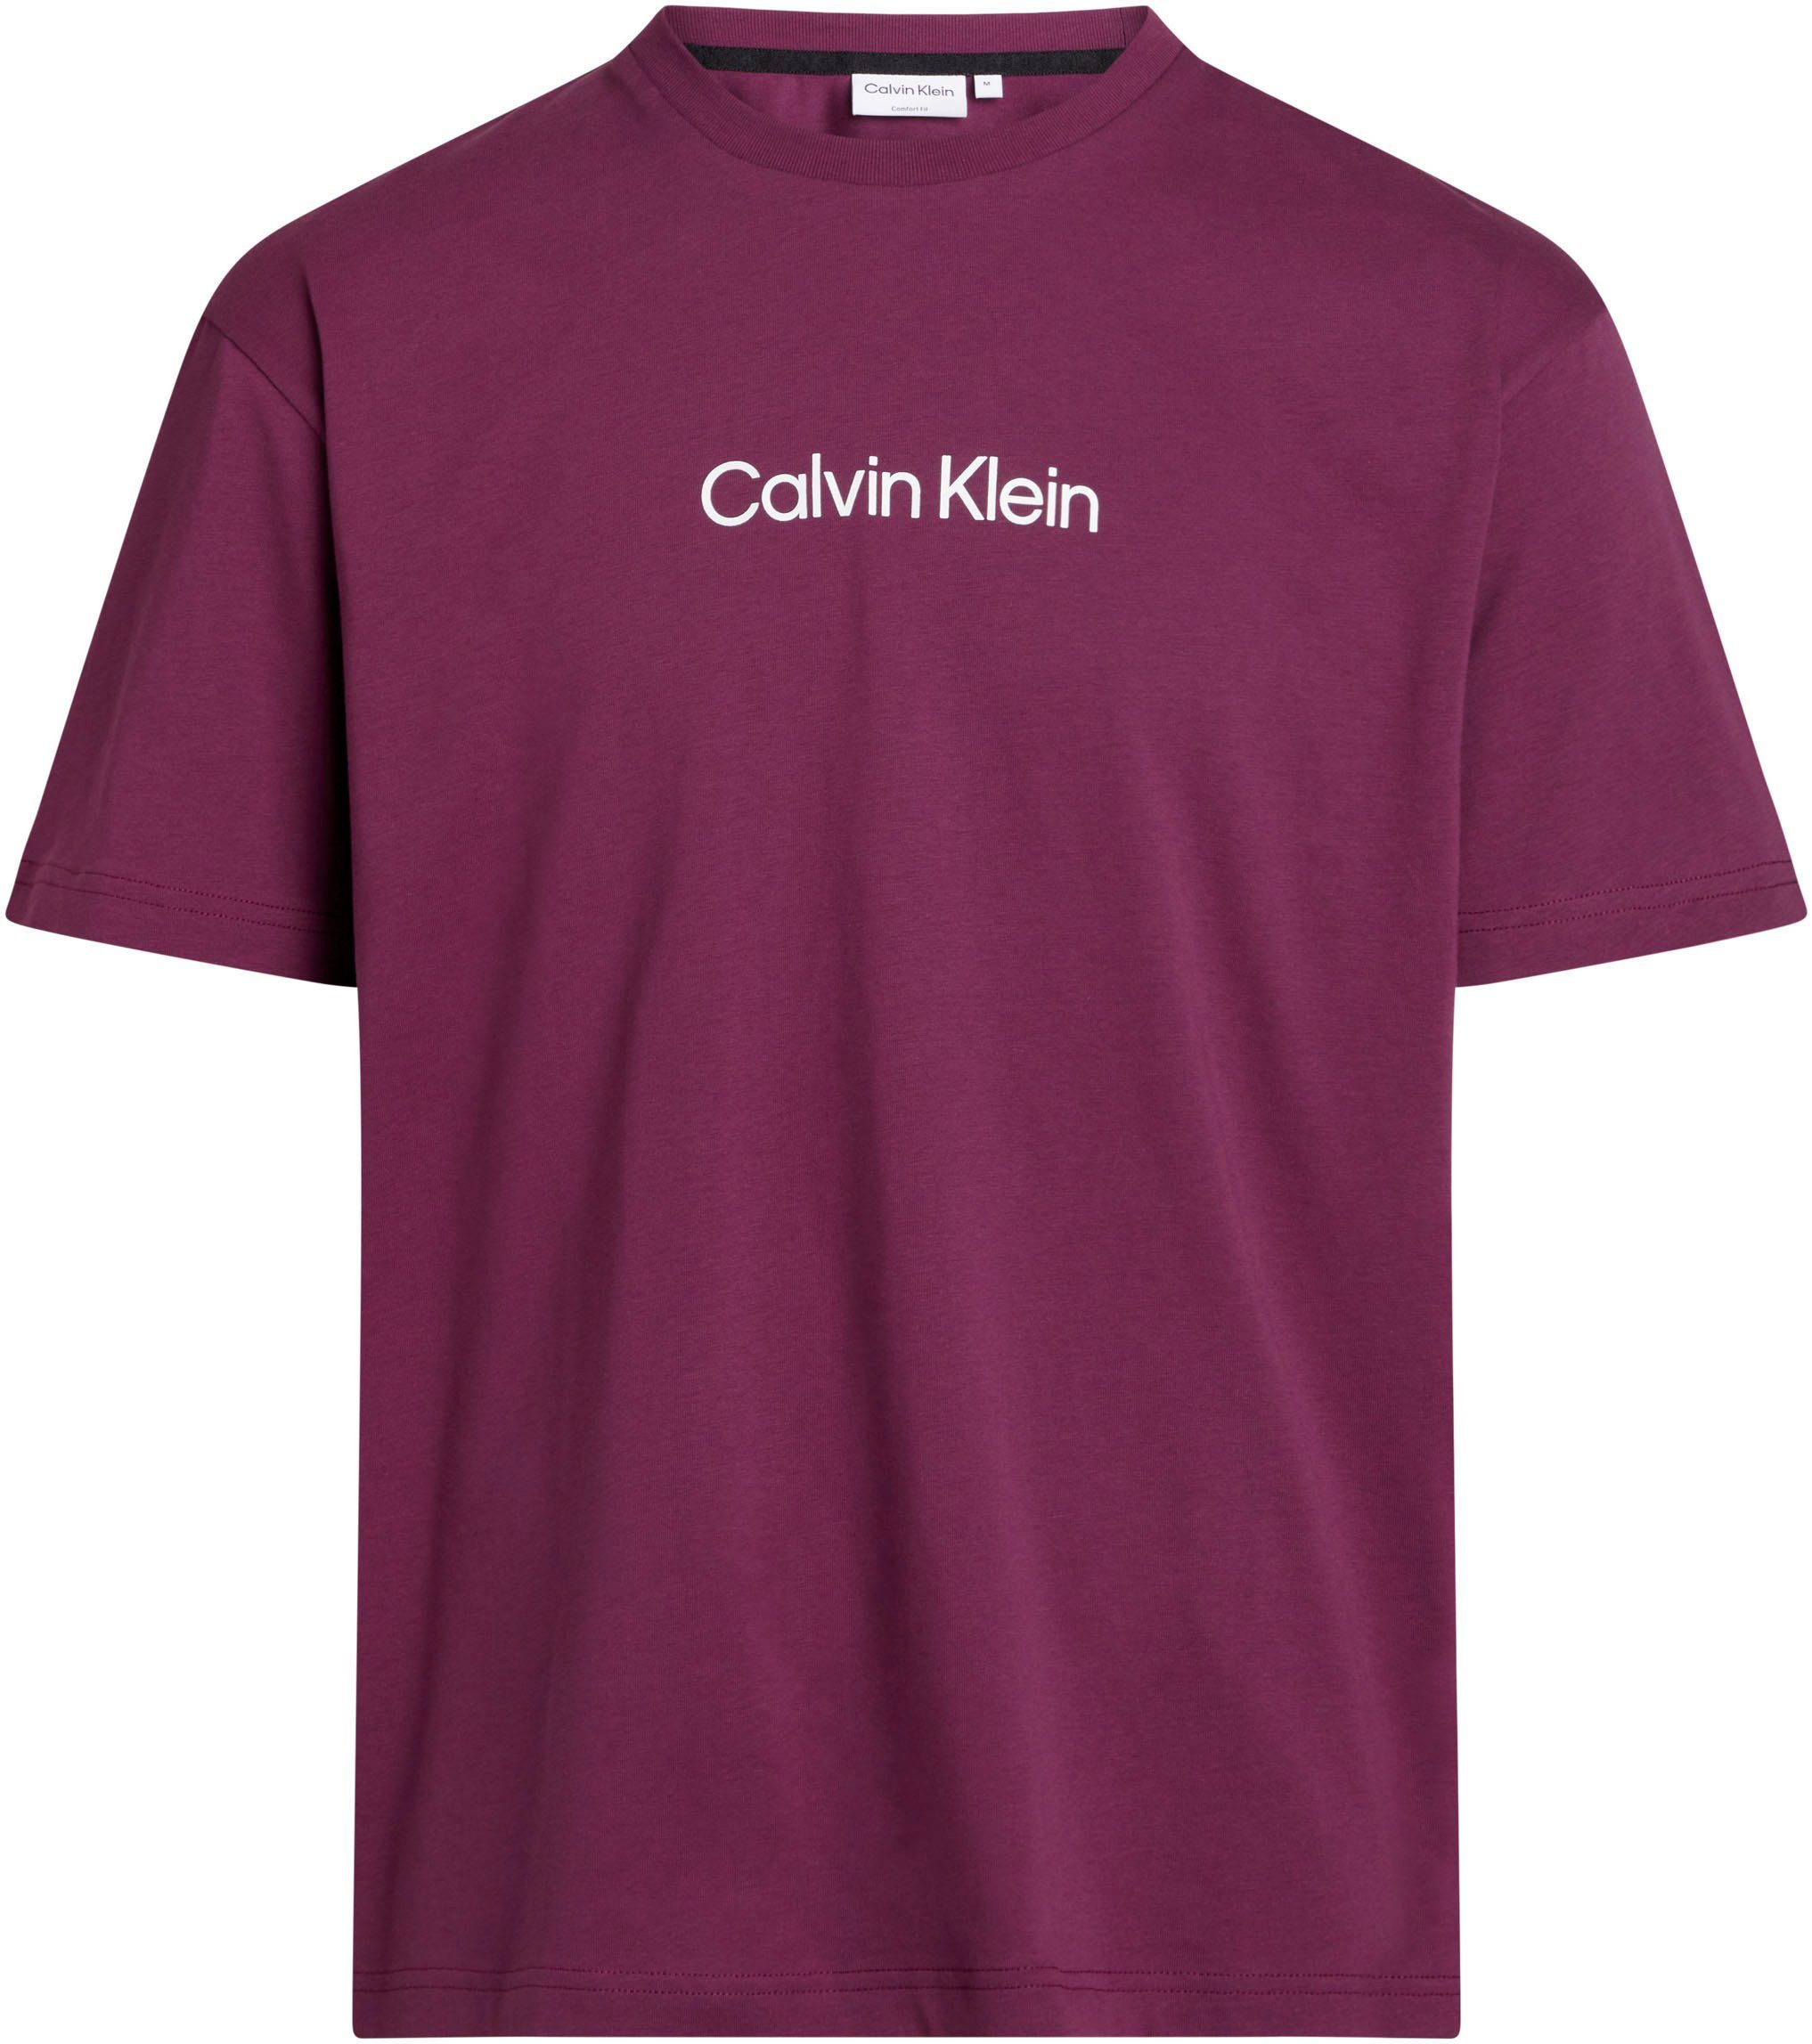 T-Shirt mit LOGO Plum Italian HERO Calvin Klein Markenlabel COMFORT aufgedrucktem T-SHIRT